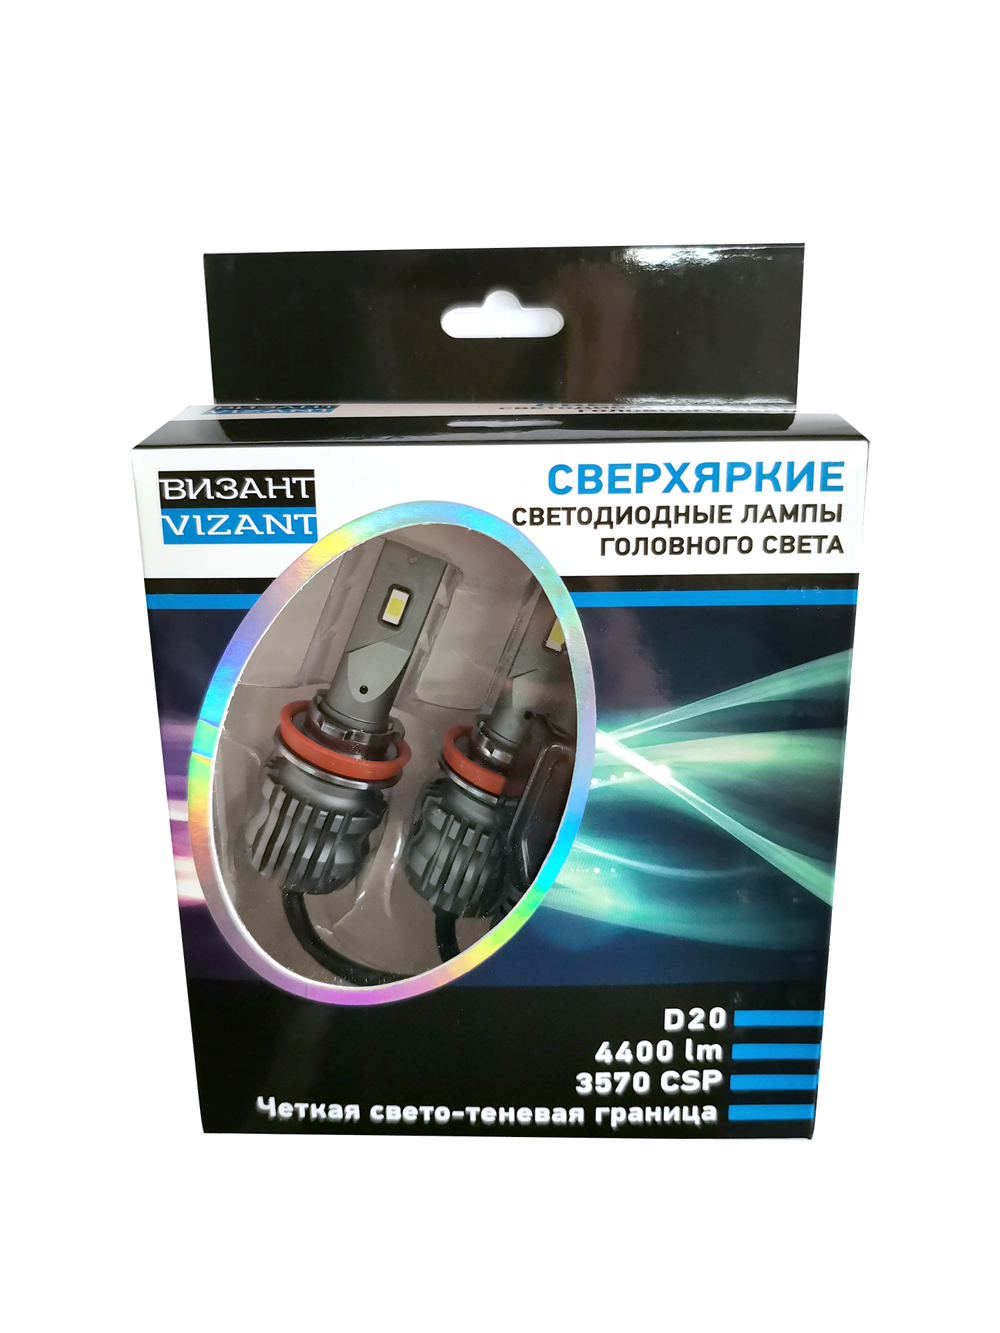 Светодиодные лампы Vizant D20 цоколь HB4 9006 с чипом csp philips 4400lm 5000k  (цена за 2 лампы)